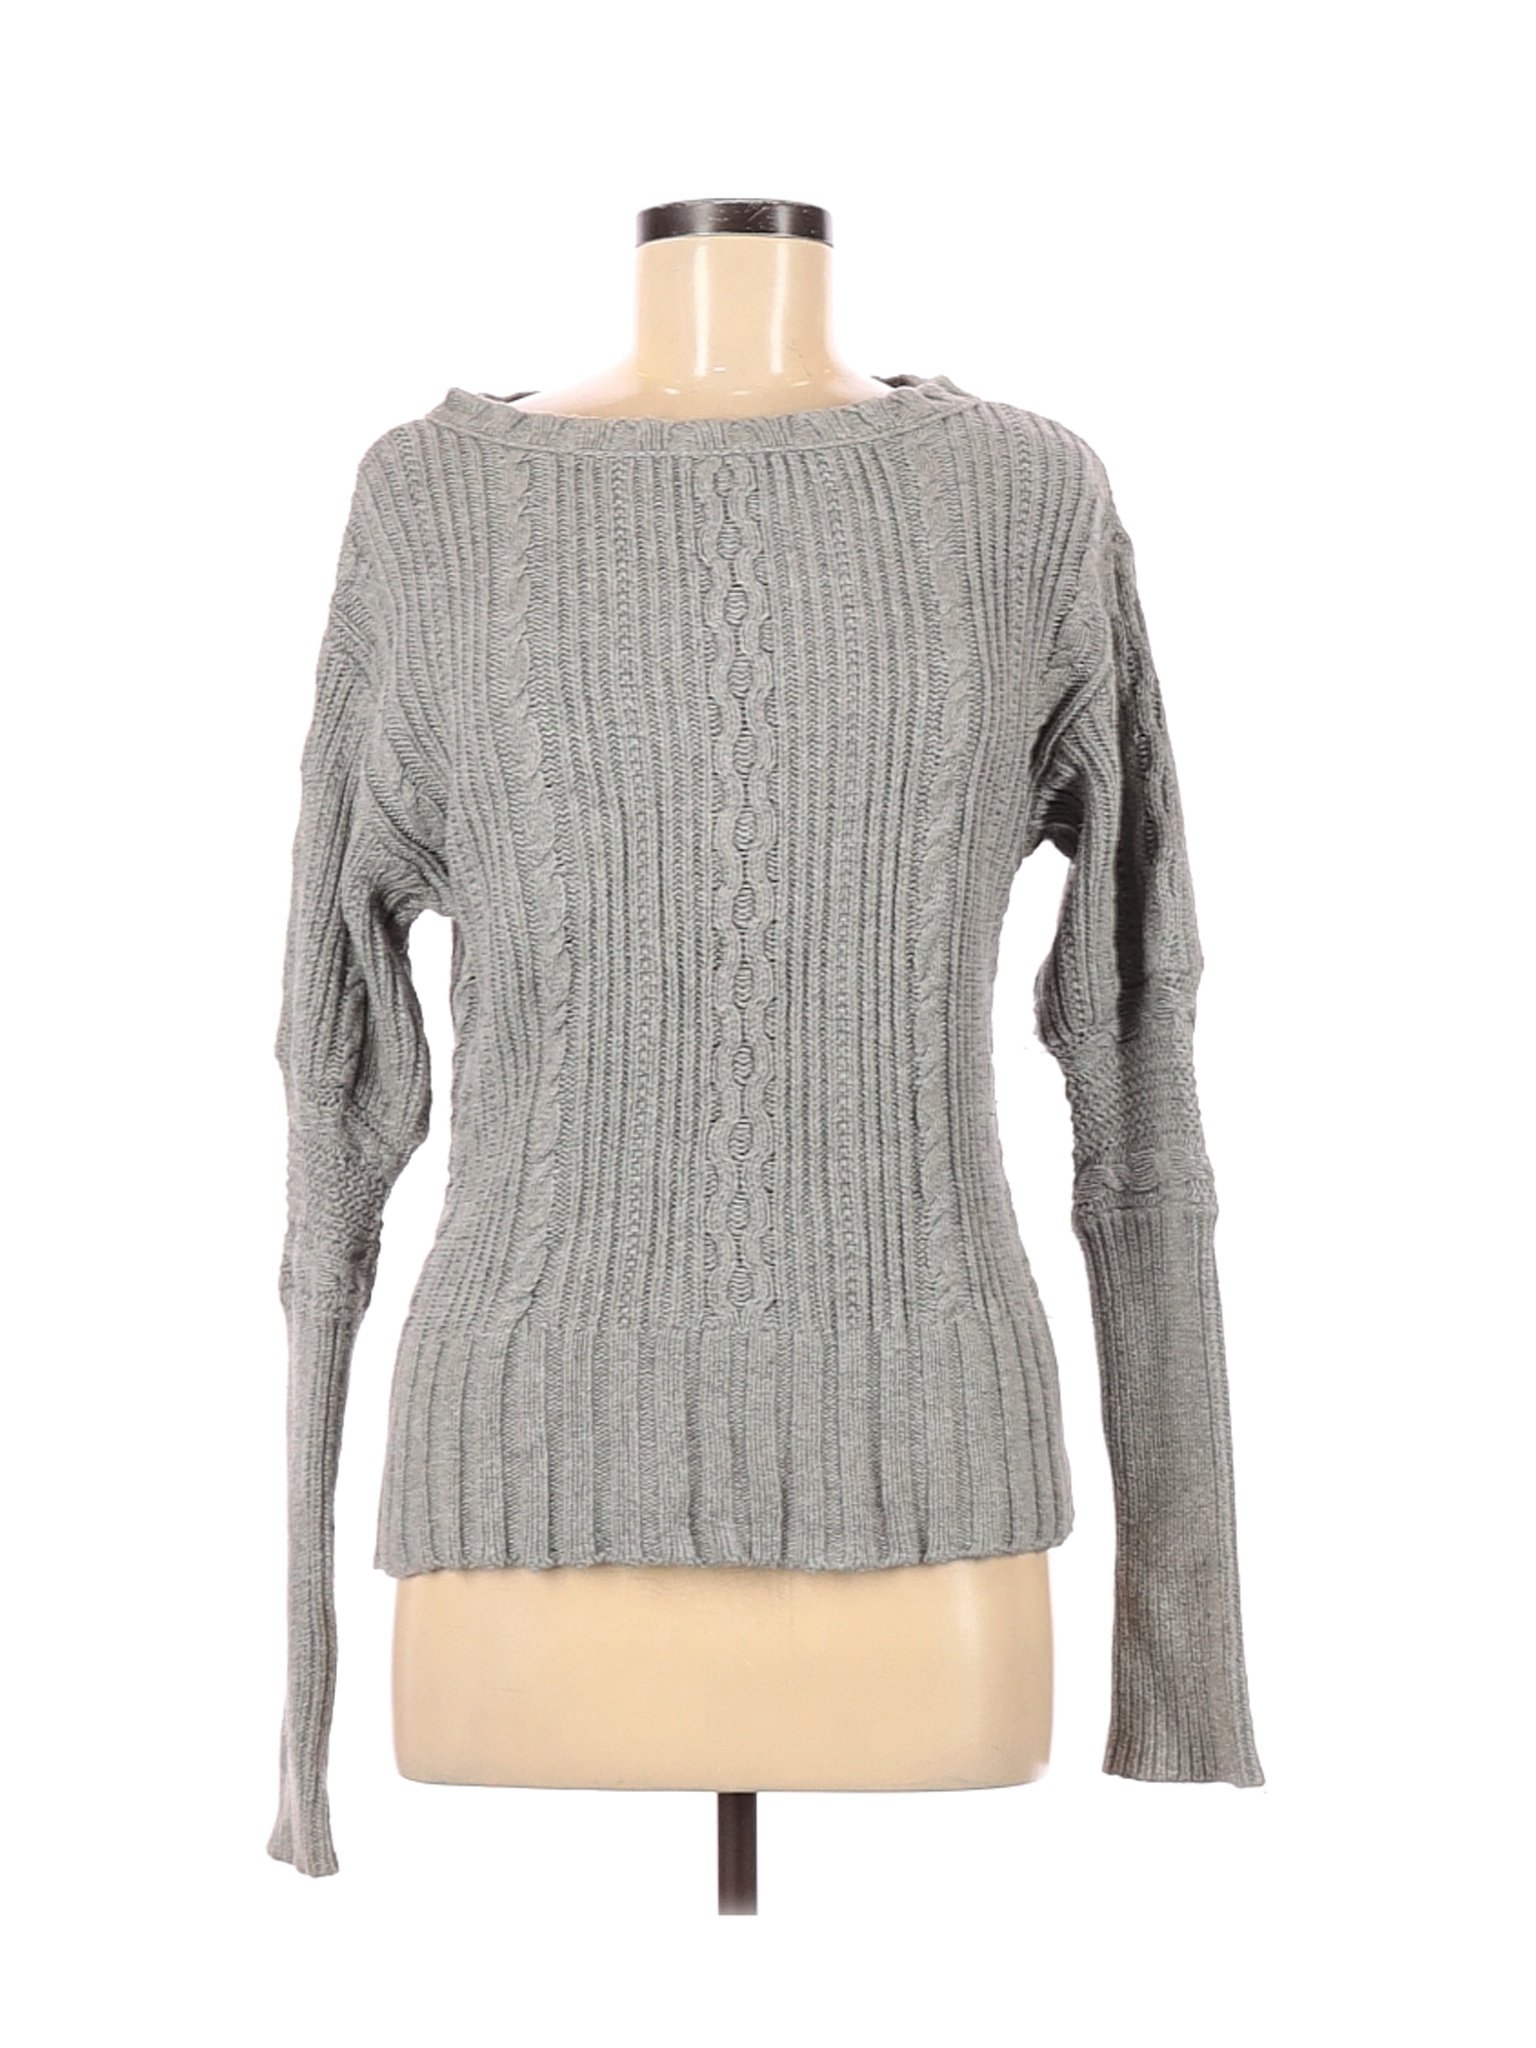 Kenar Women Gray Pullover Sweater S | eBay